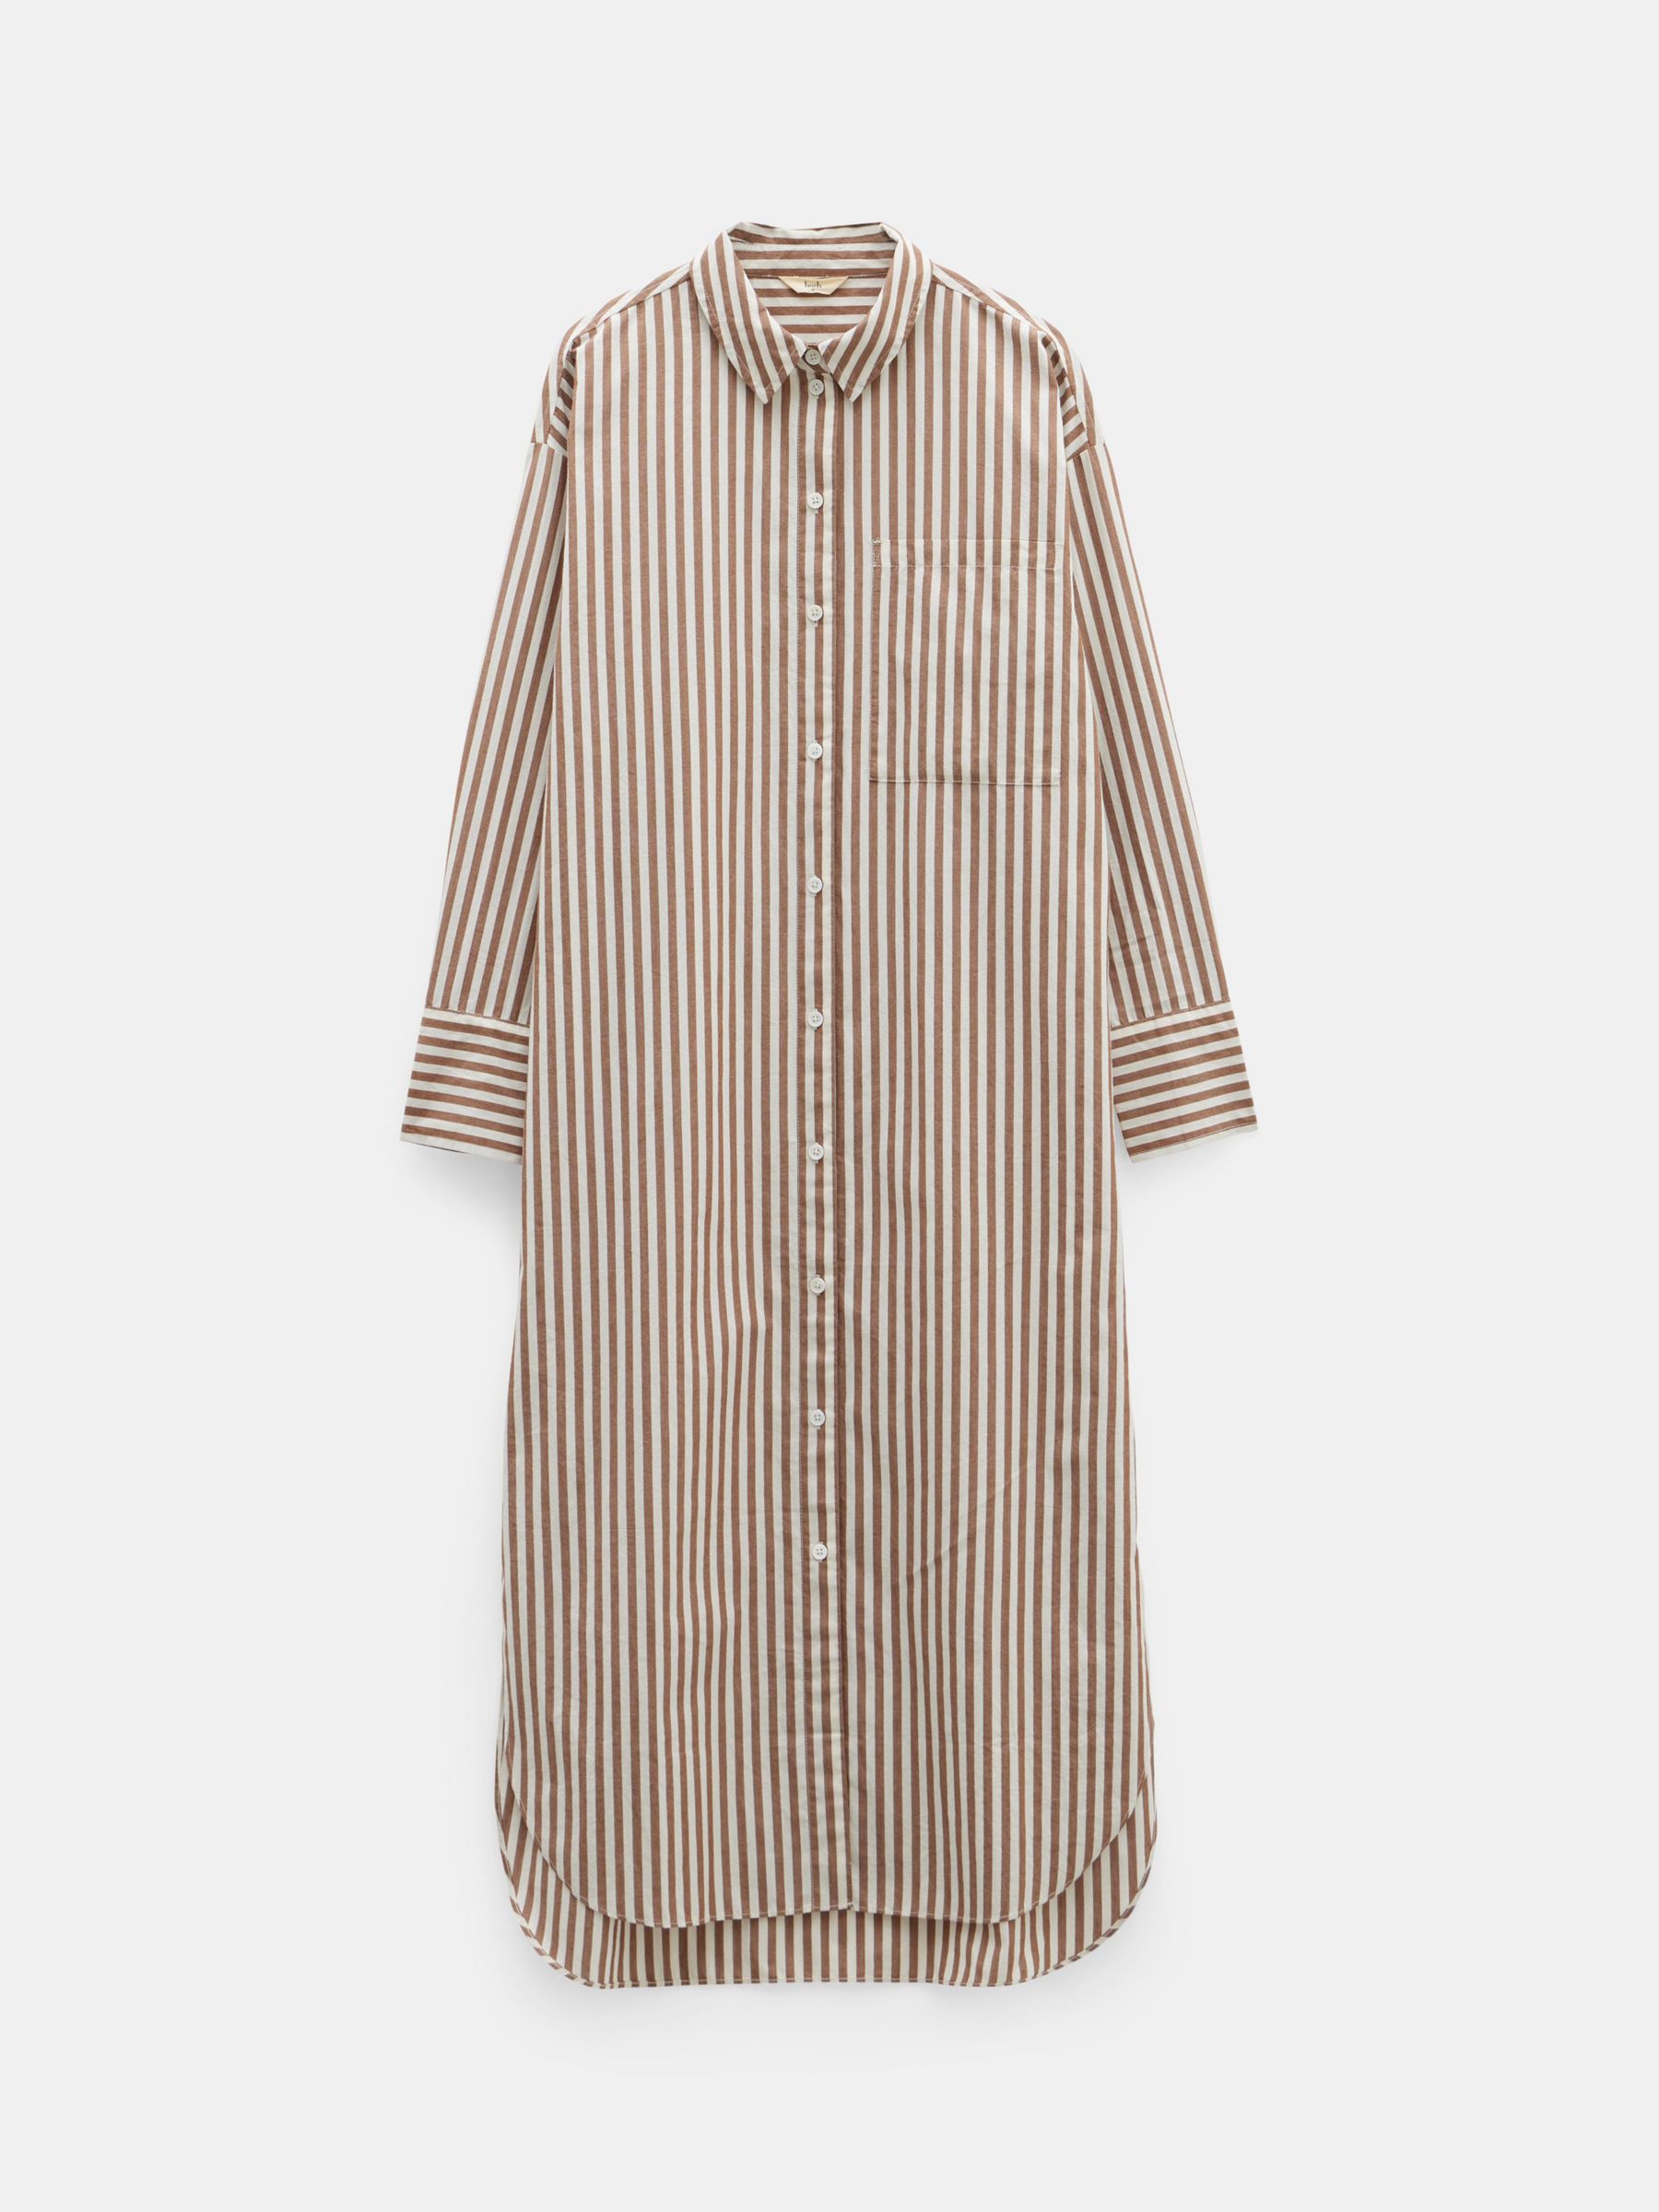 HUSH Sahra Striped Shirt Dress, Brown/White, 8